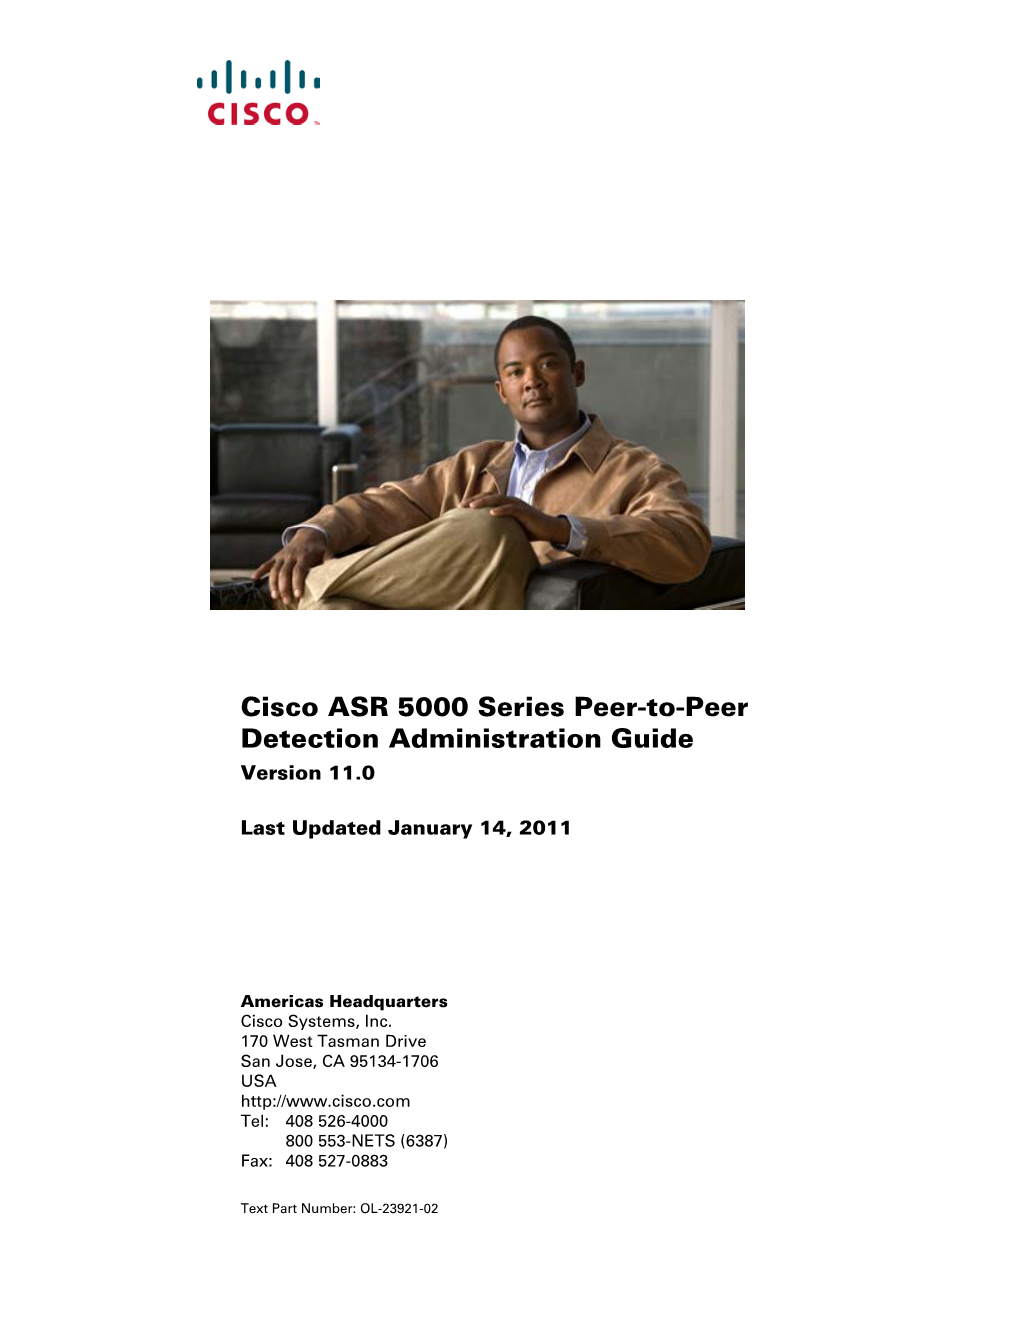 Cisco ASR 5000 Series Peer-To-Peer Detection Administration Guide Version 11.0